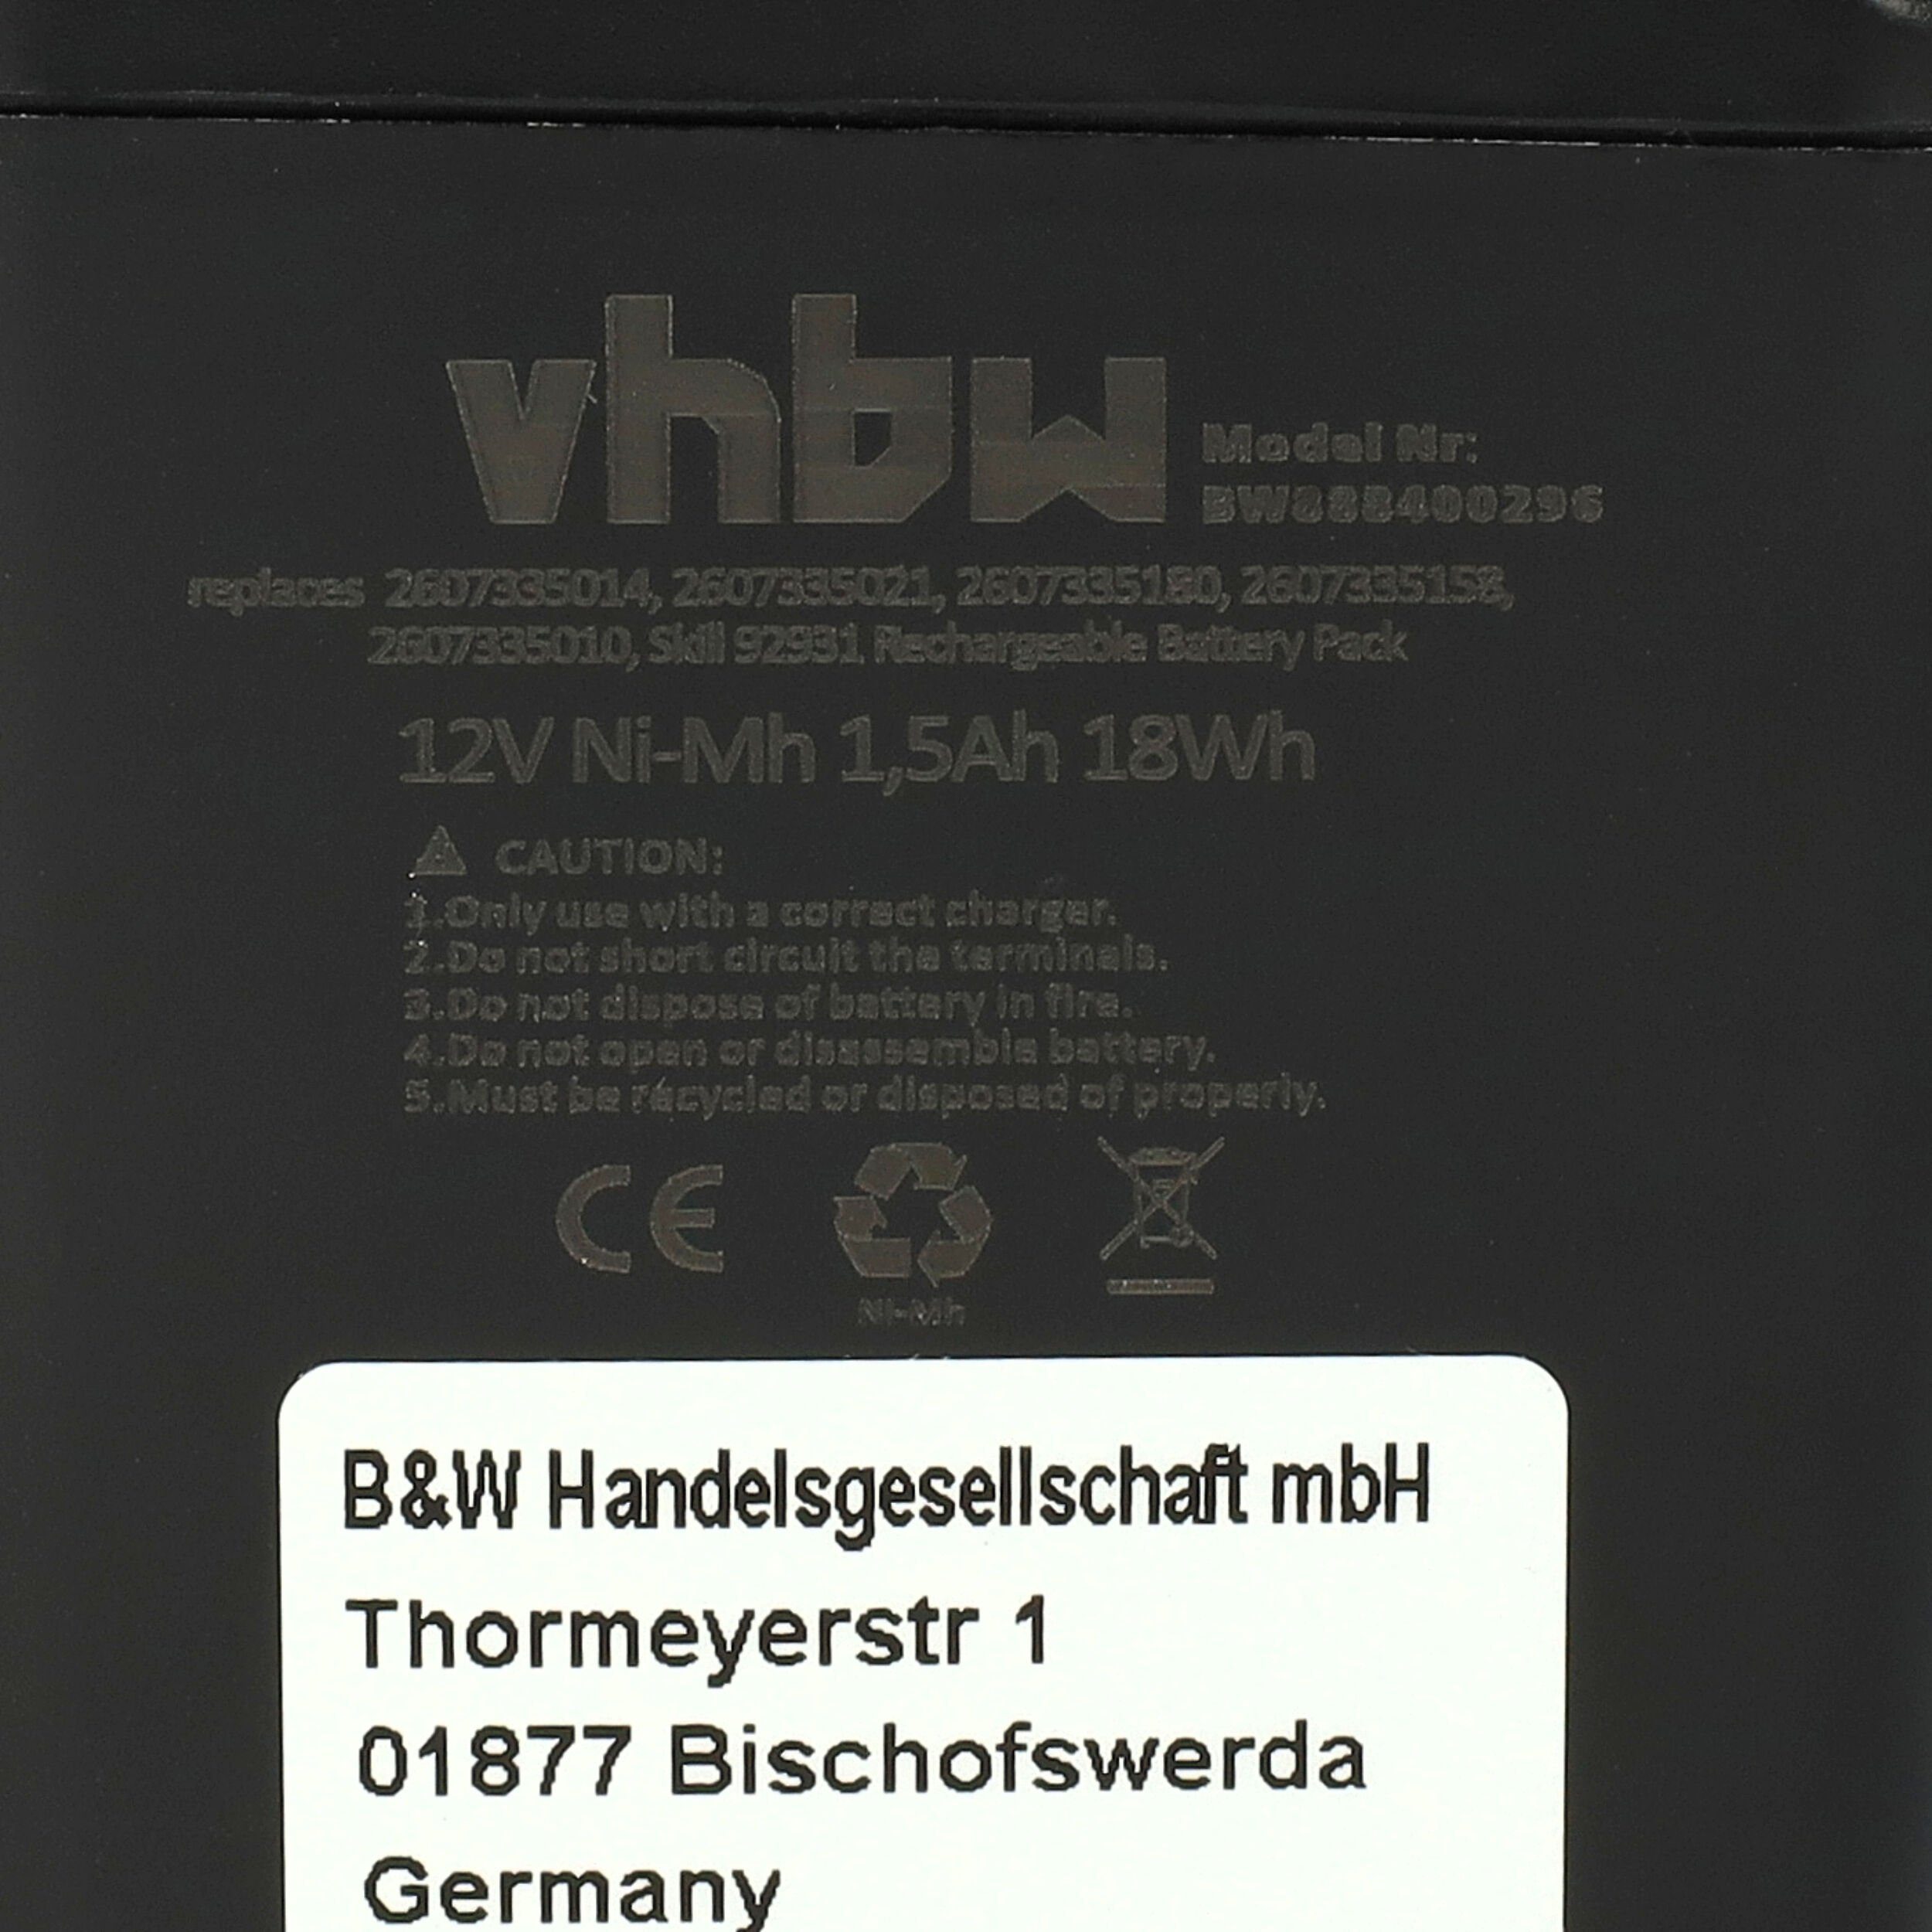 vhbw kompatibel mit Bosch (12 NiMH mAh Generation PBM-Serie mit Akku V) 1. 1500 Knolle